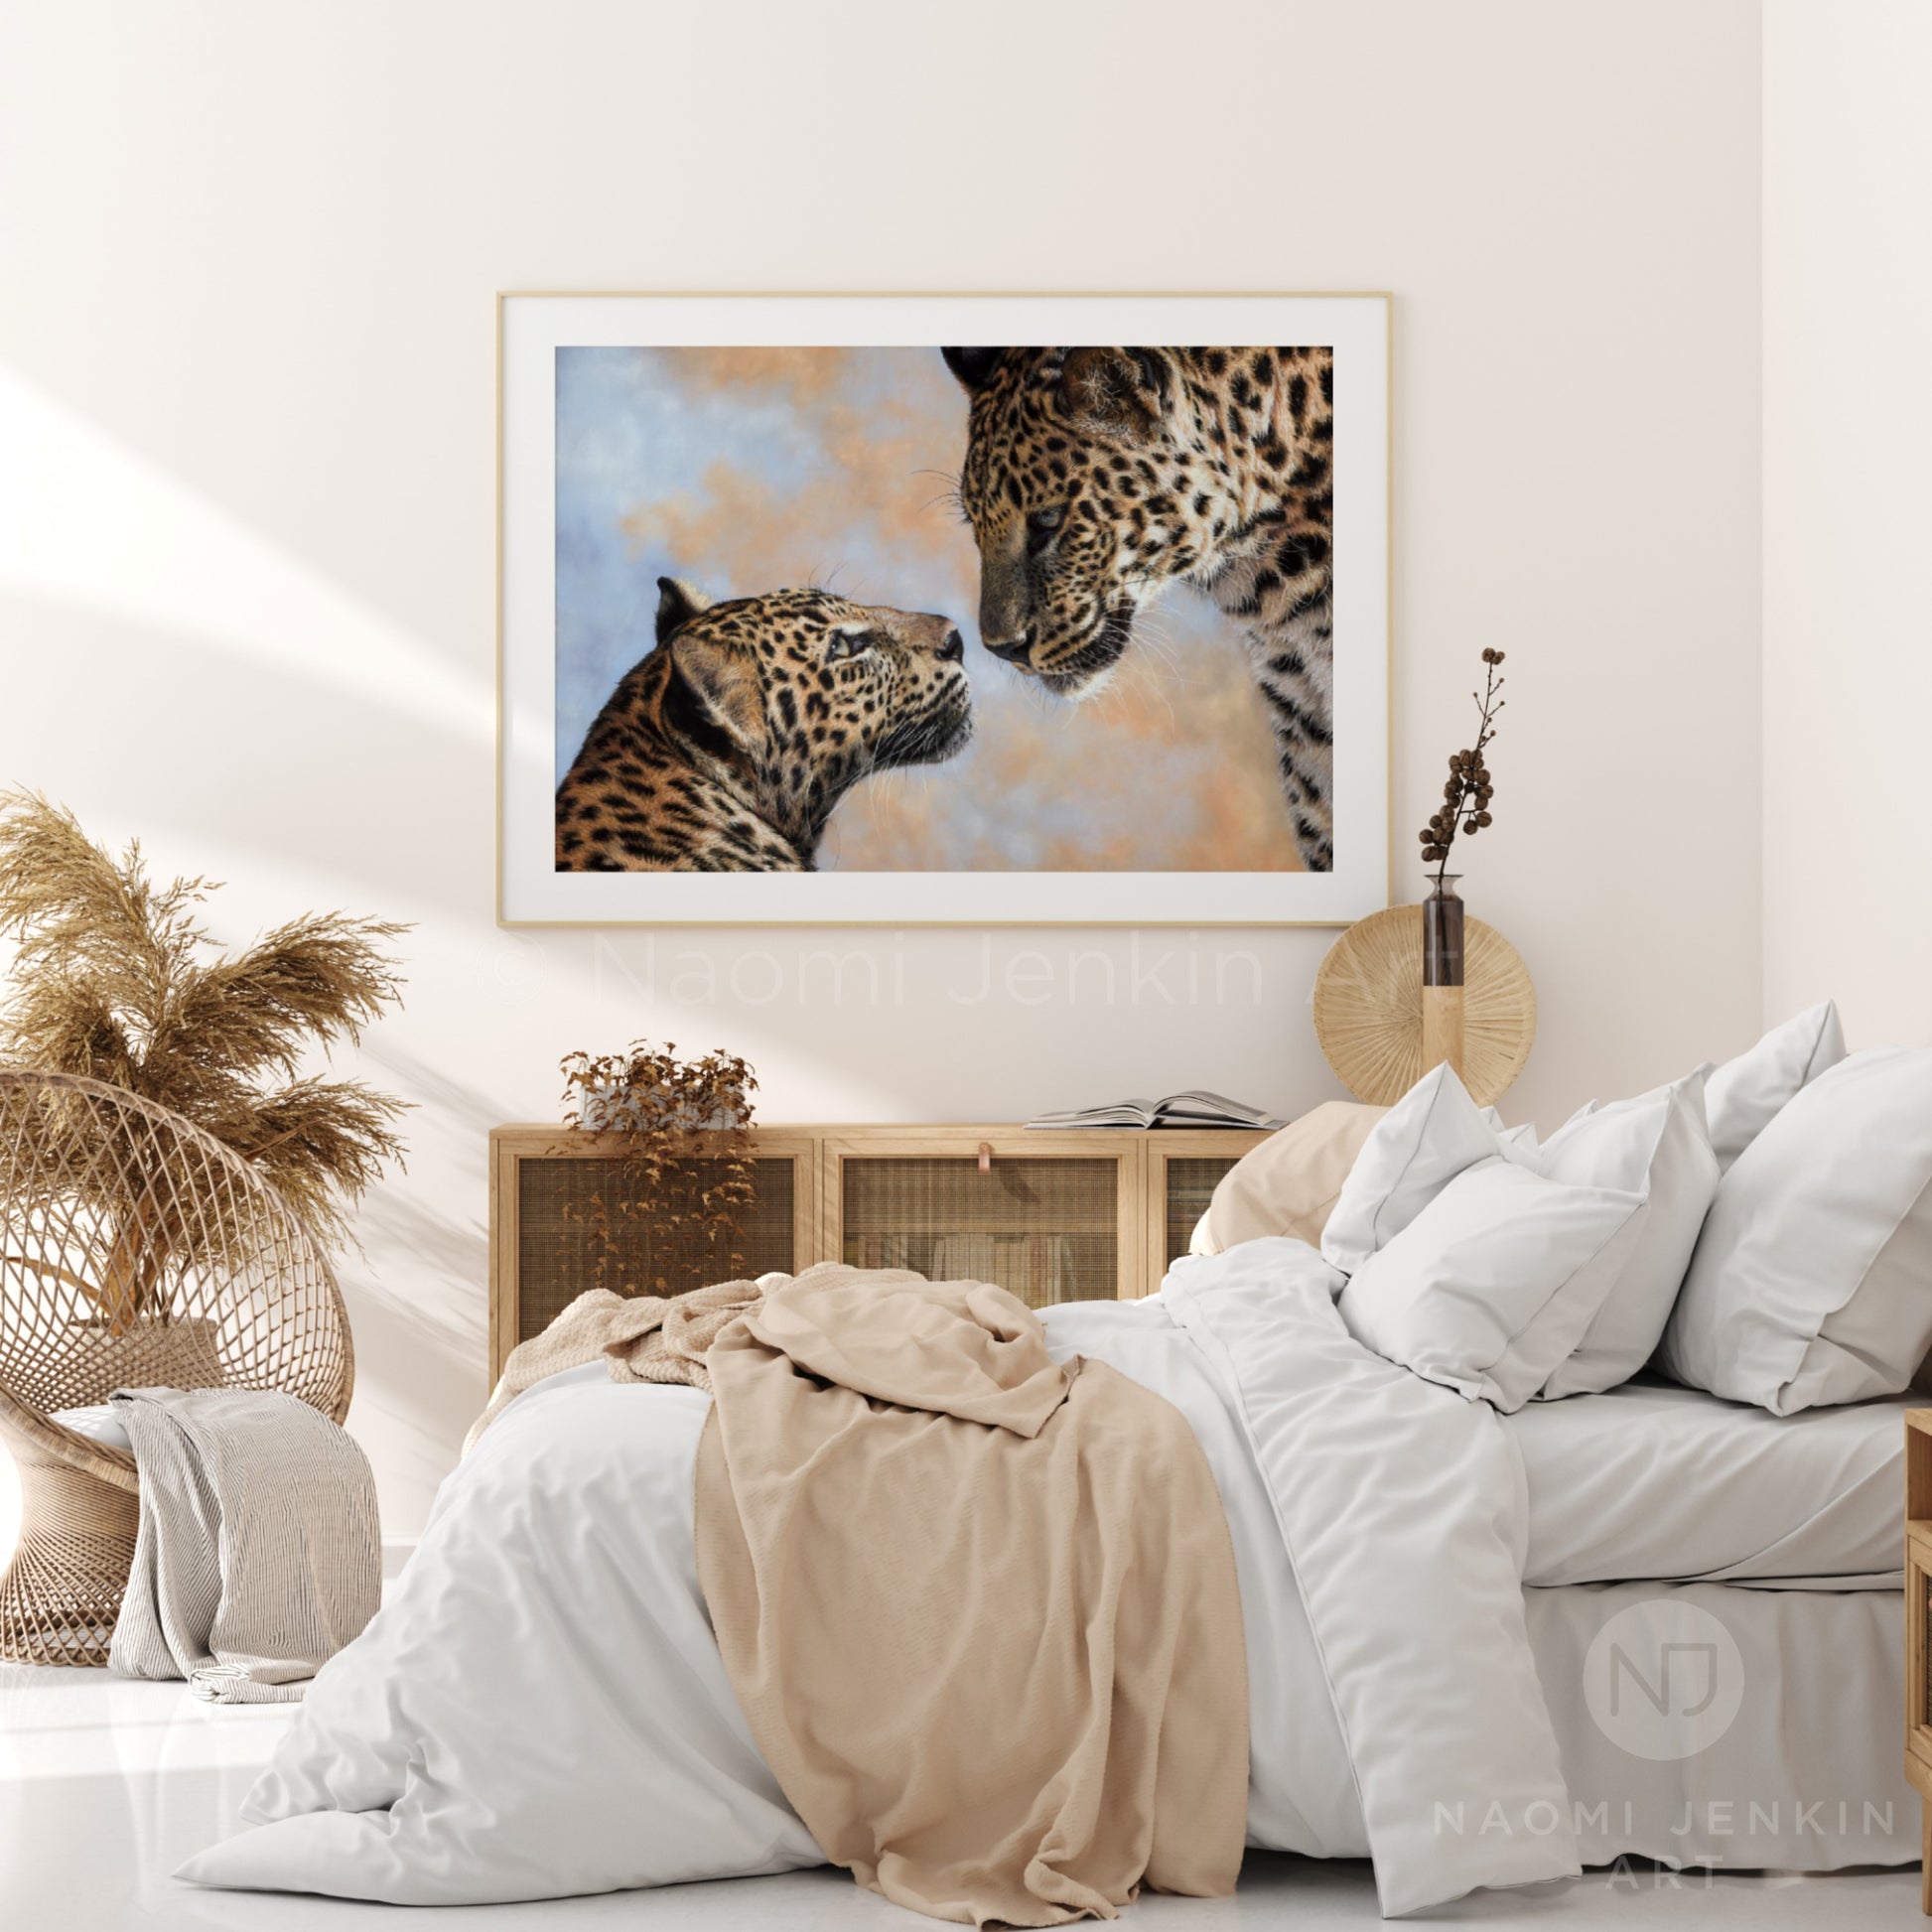 Framed leopard art print in a bedroom setting by wildlife artist Naomi Jenkin Art